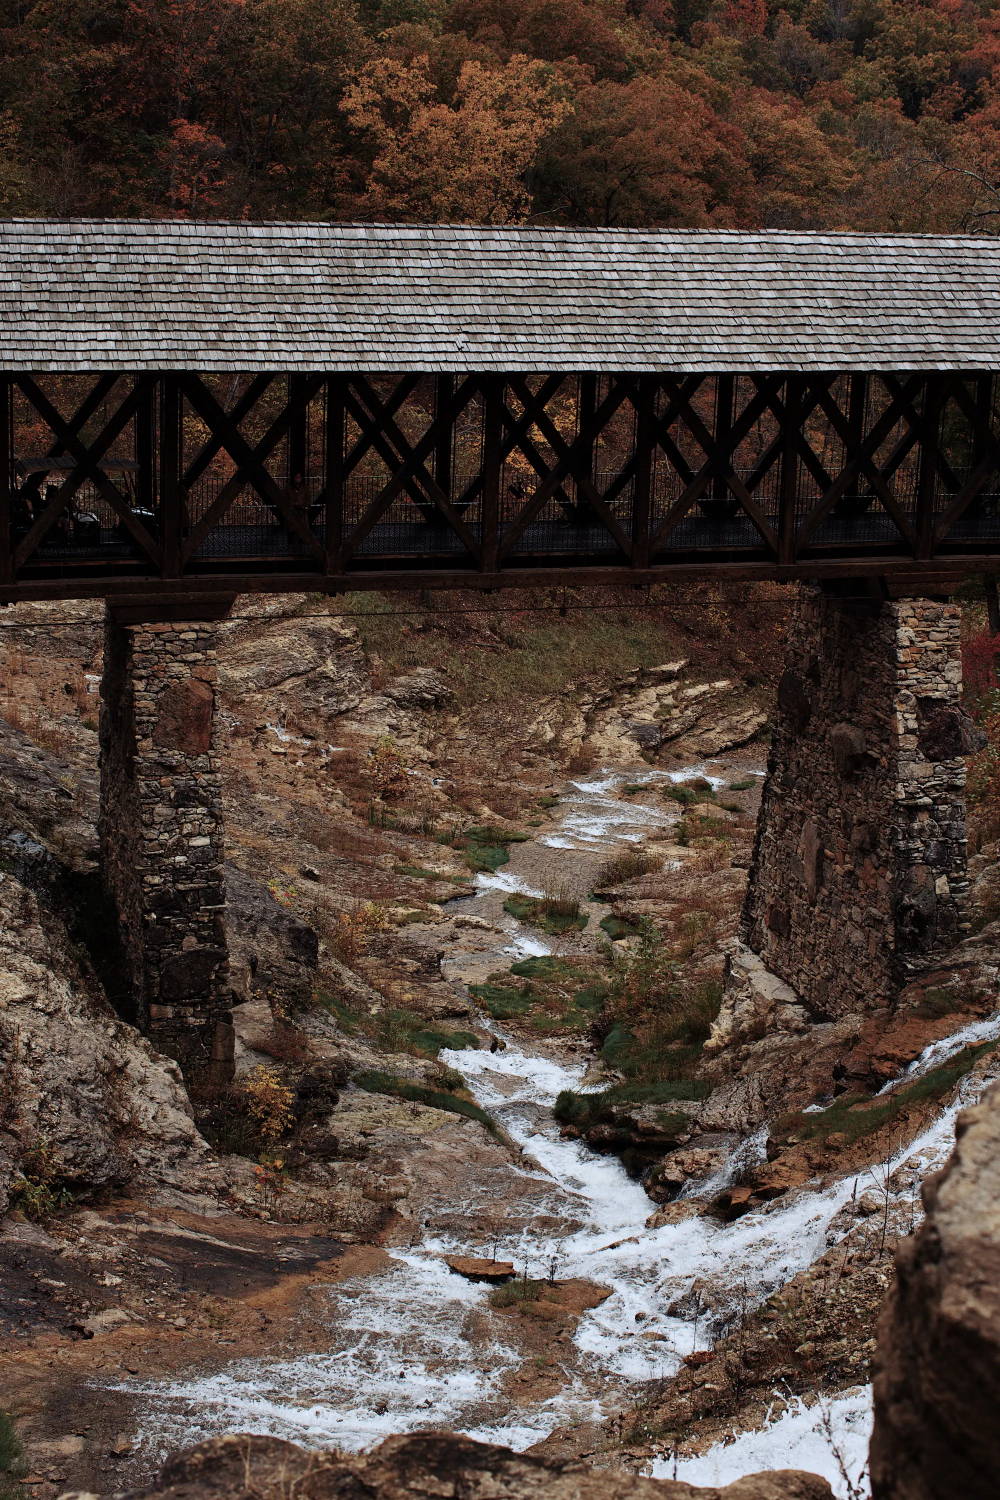 Wood and stone bridge over a hidden mountain waterfall.